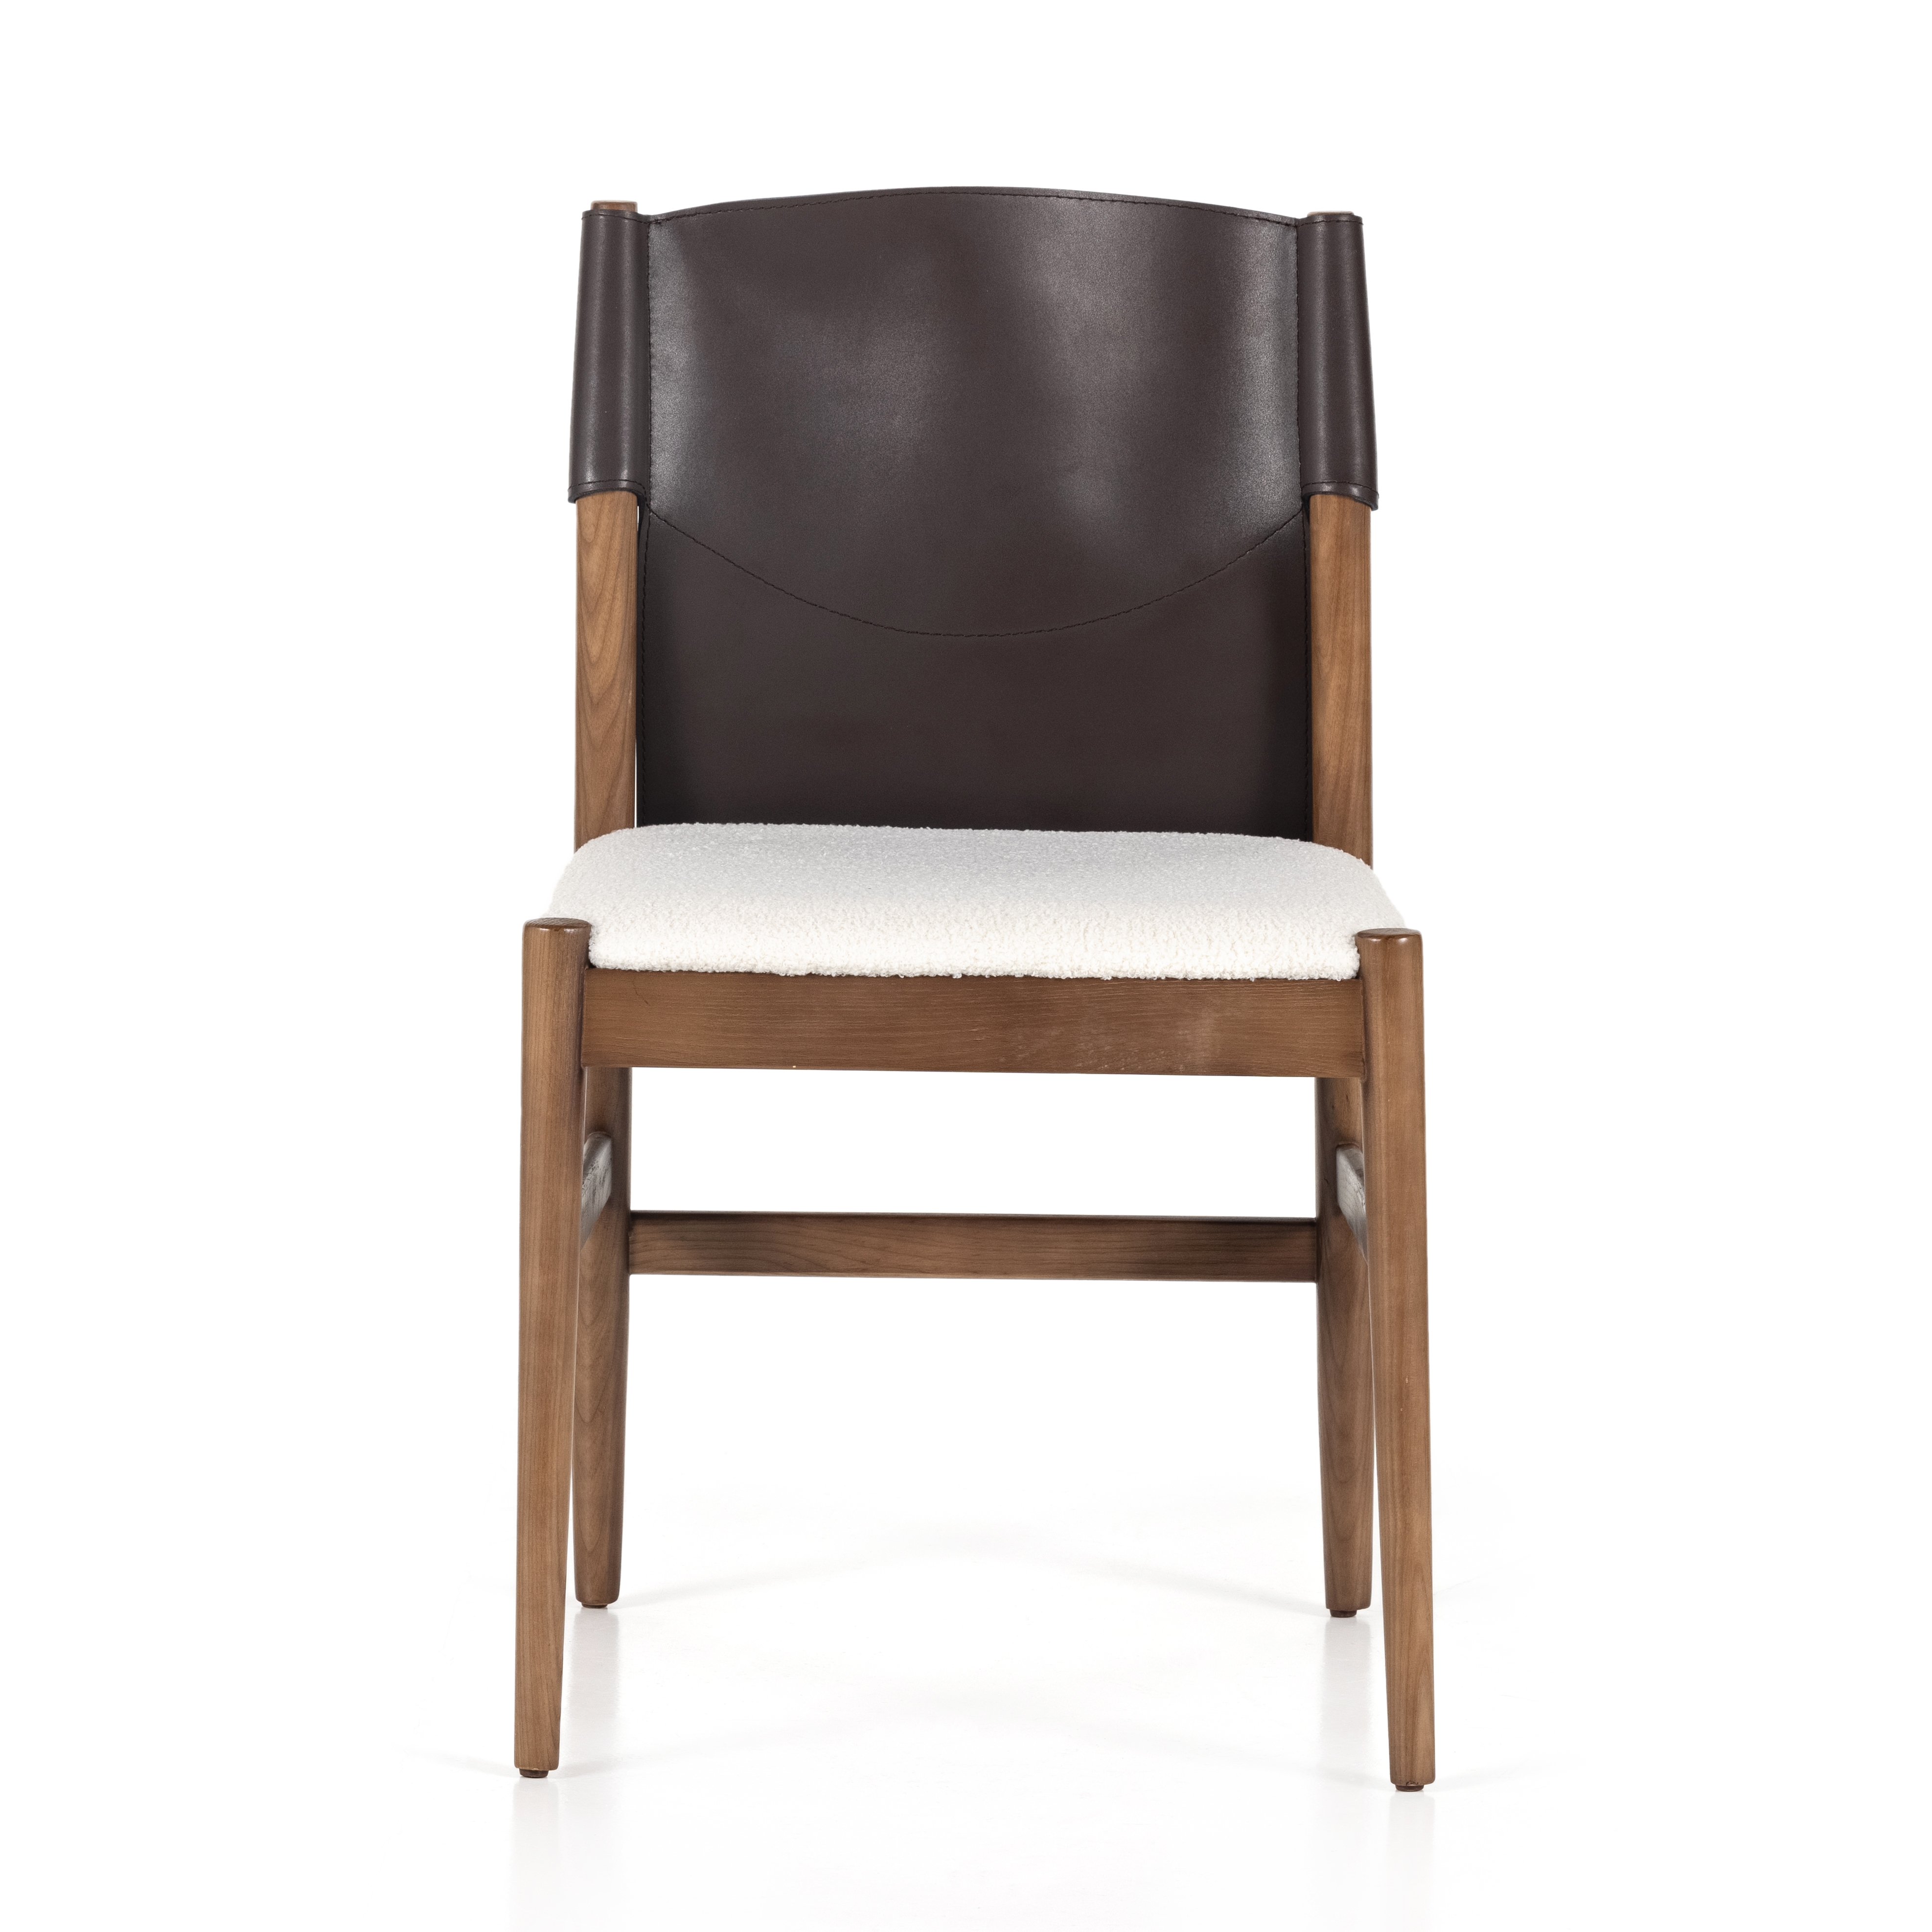 Lulu Armless Dining Chair-Espresso Lthr - Image 4